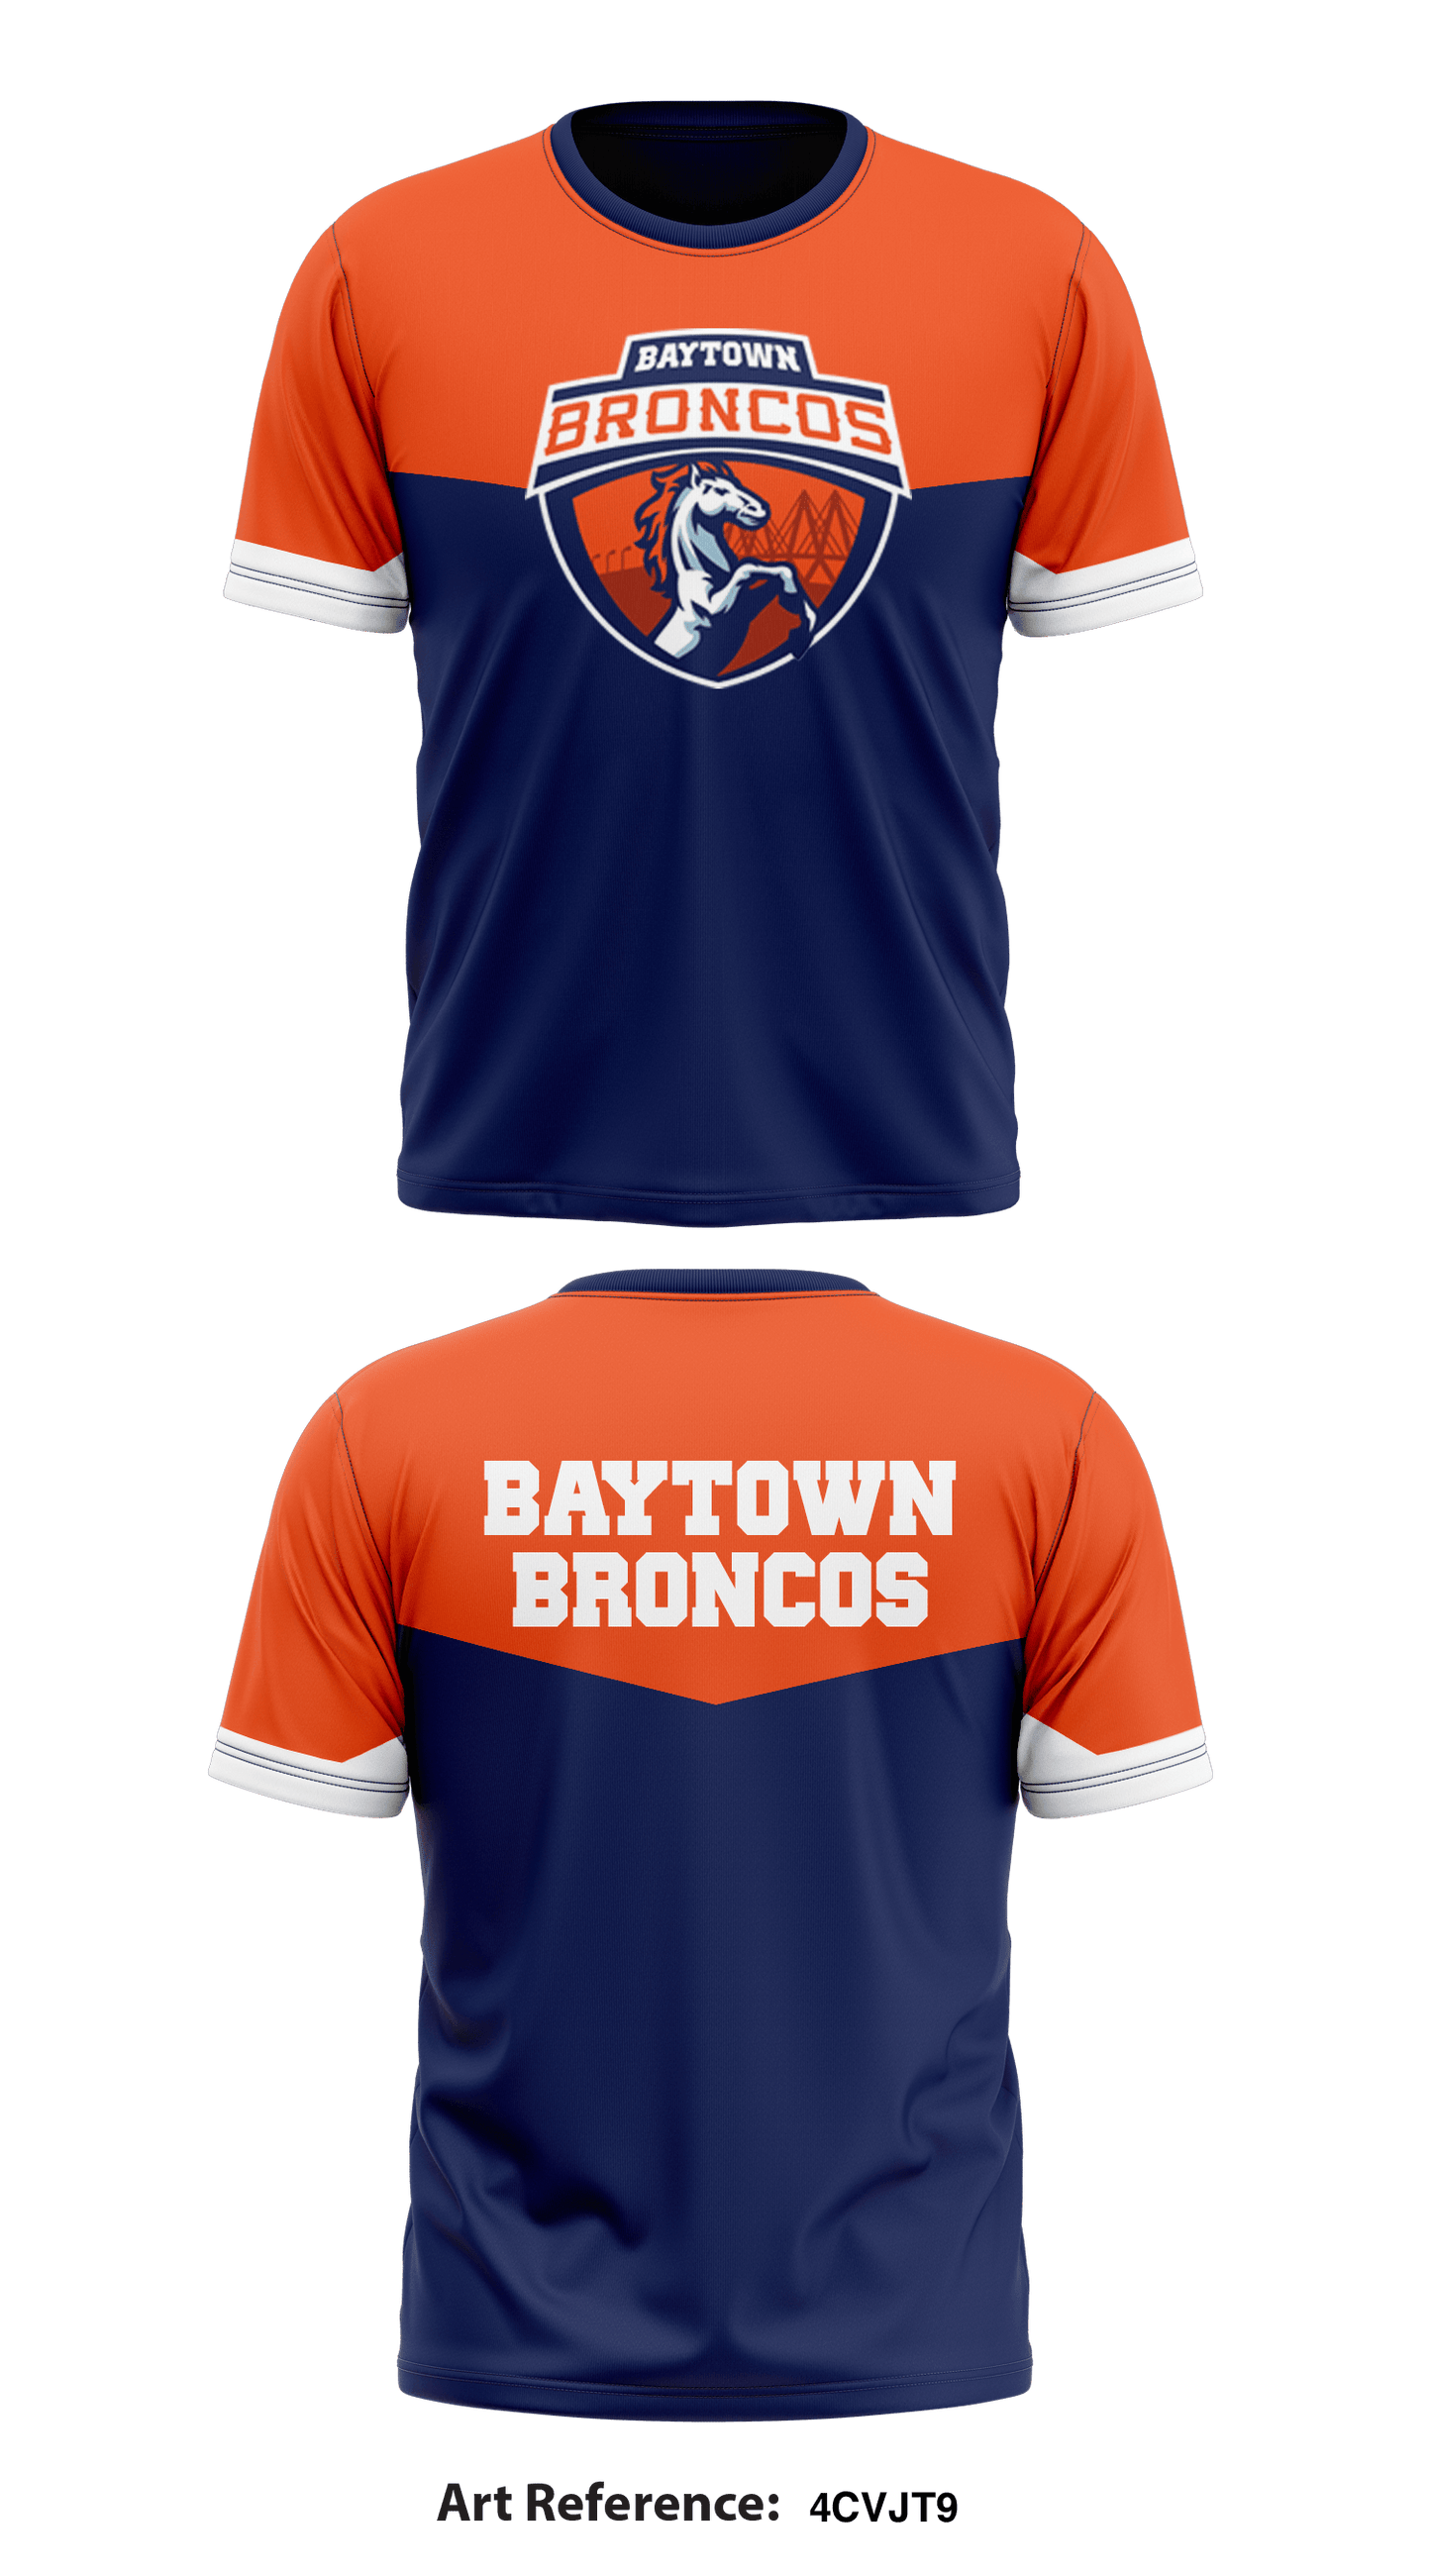 Baytown Broncos Core Men's SS Performance Tee - 4cvjt9